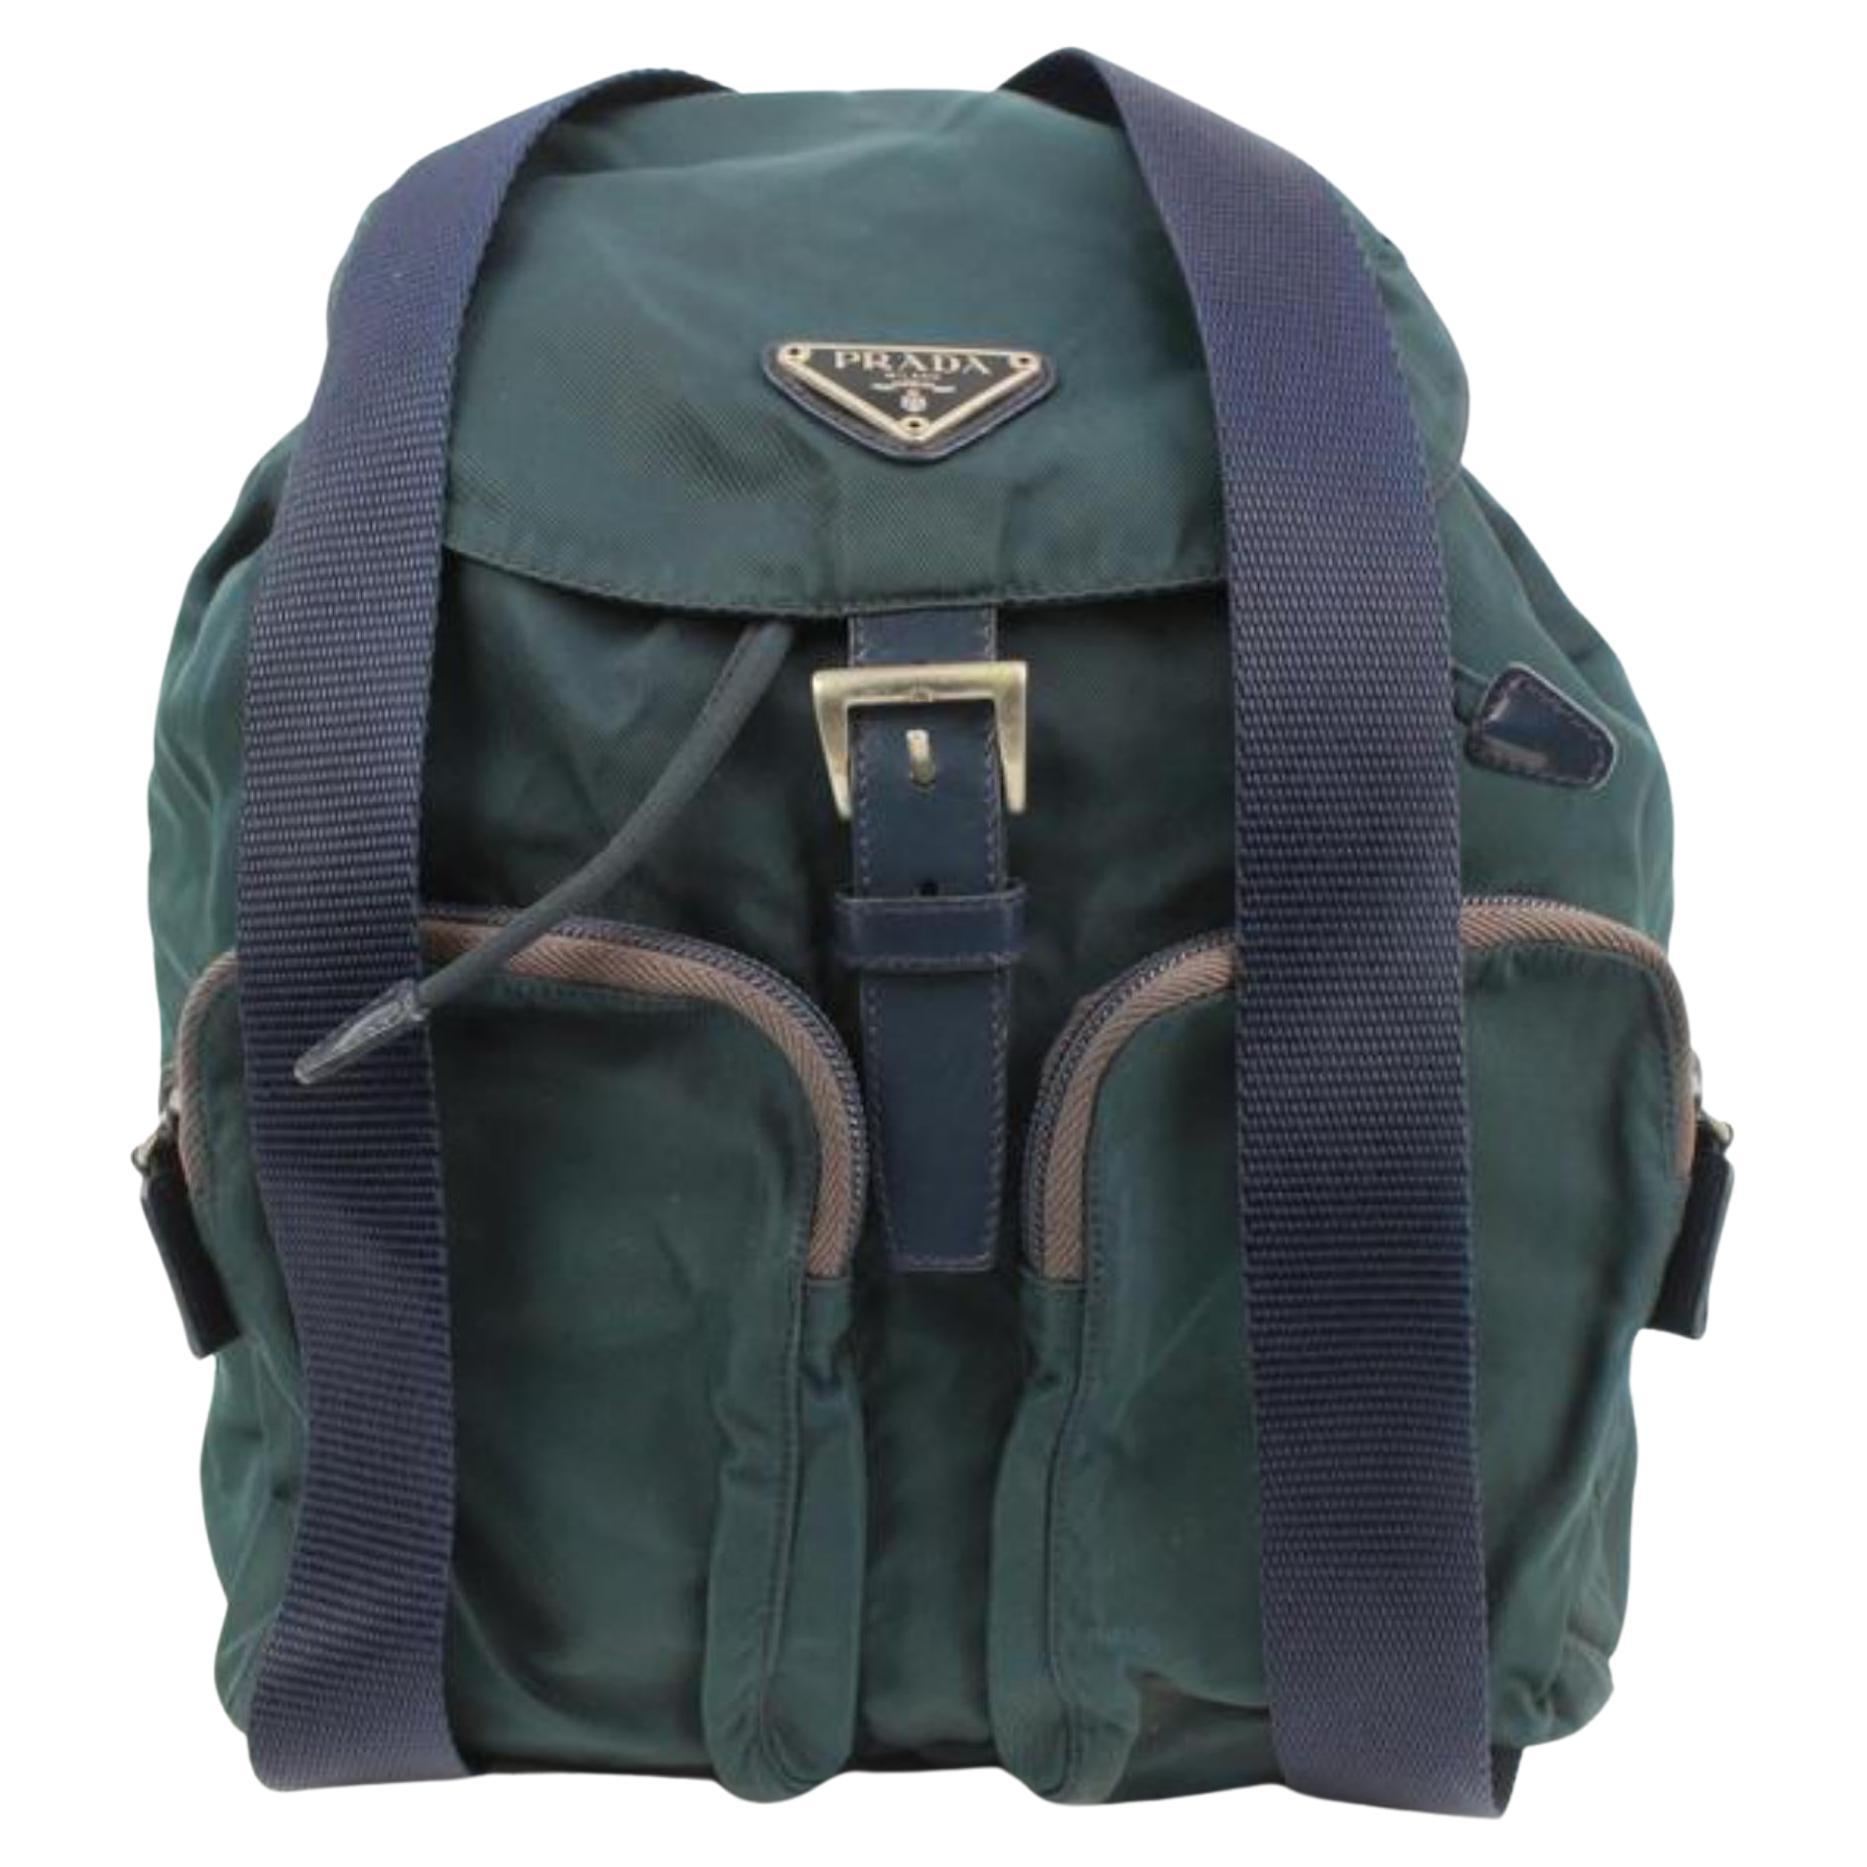 Green Prada Backpack - 2 For Sale on 1stDibs